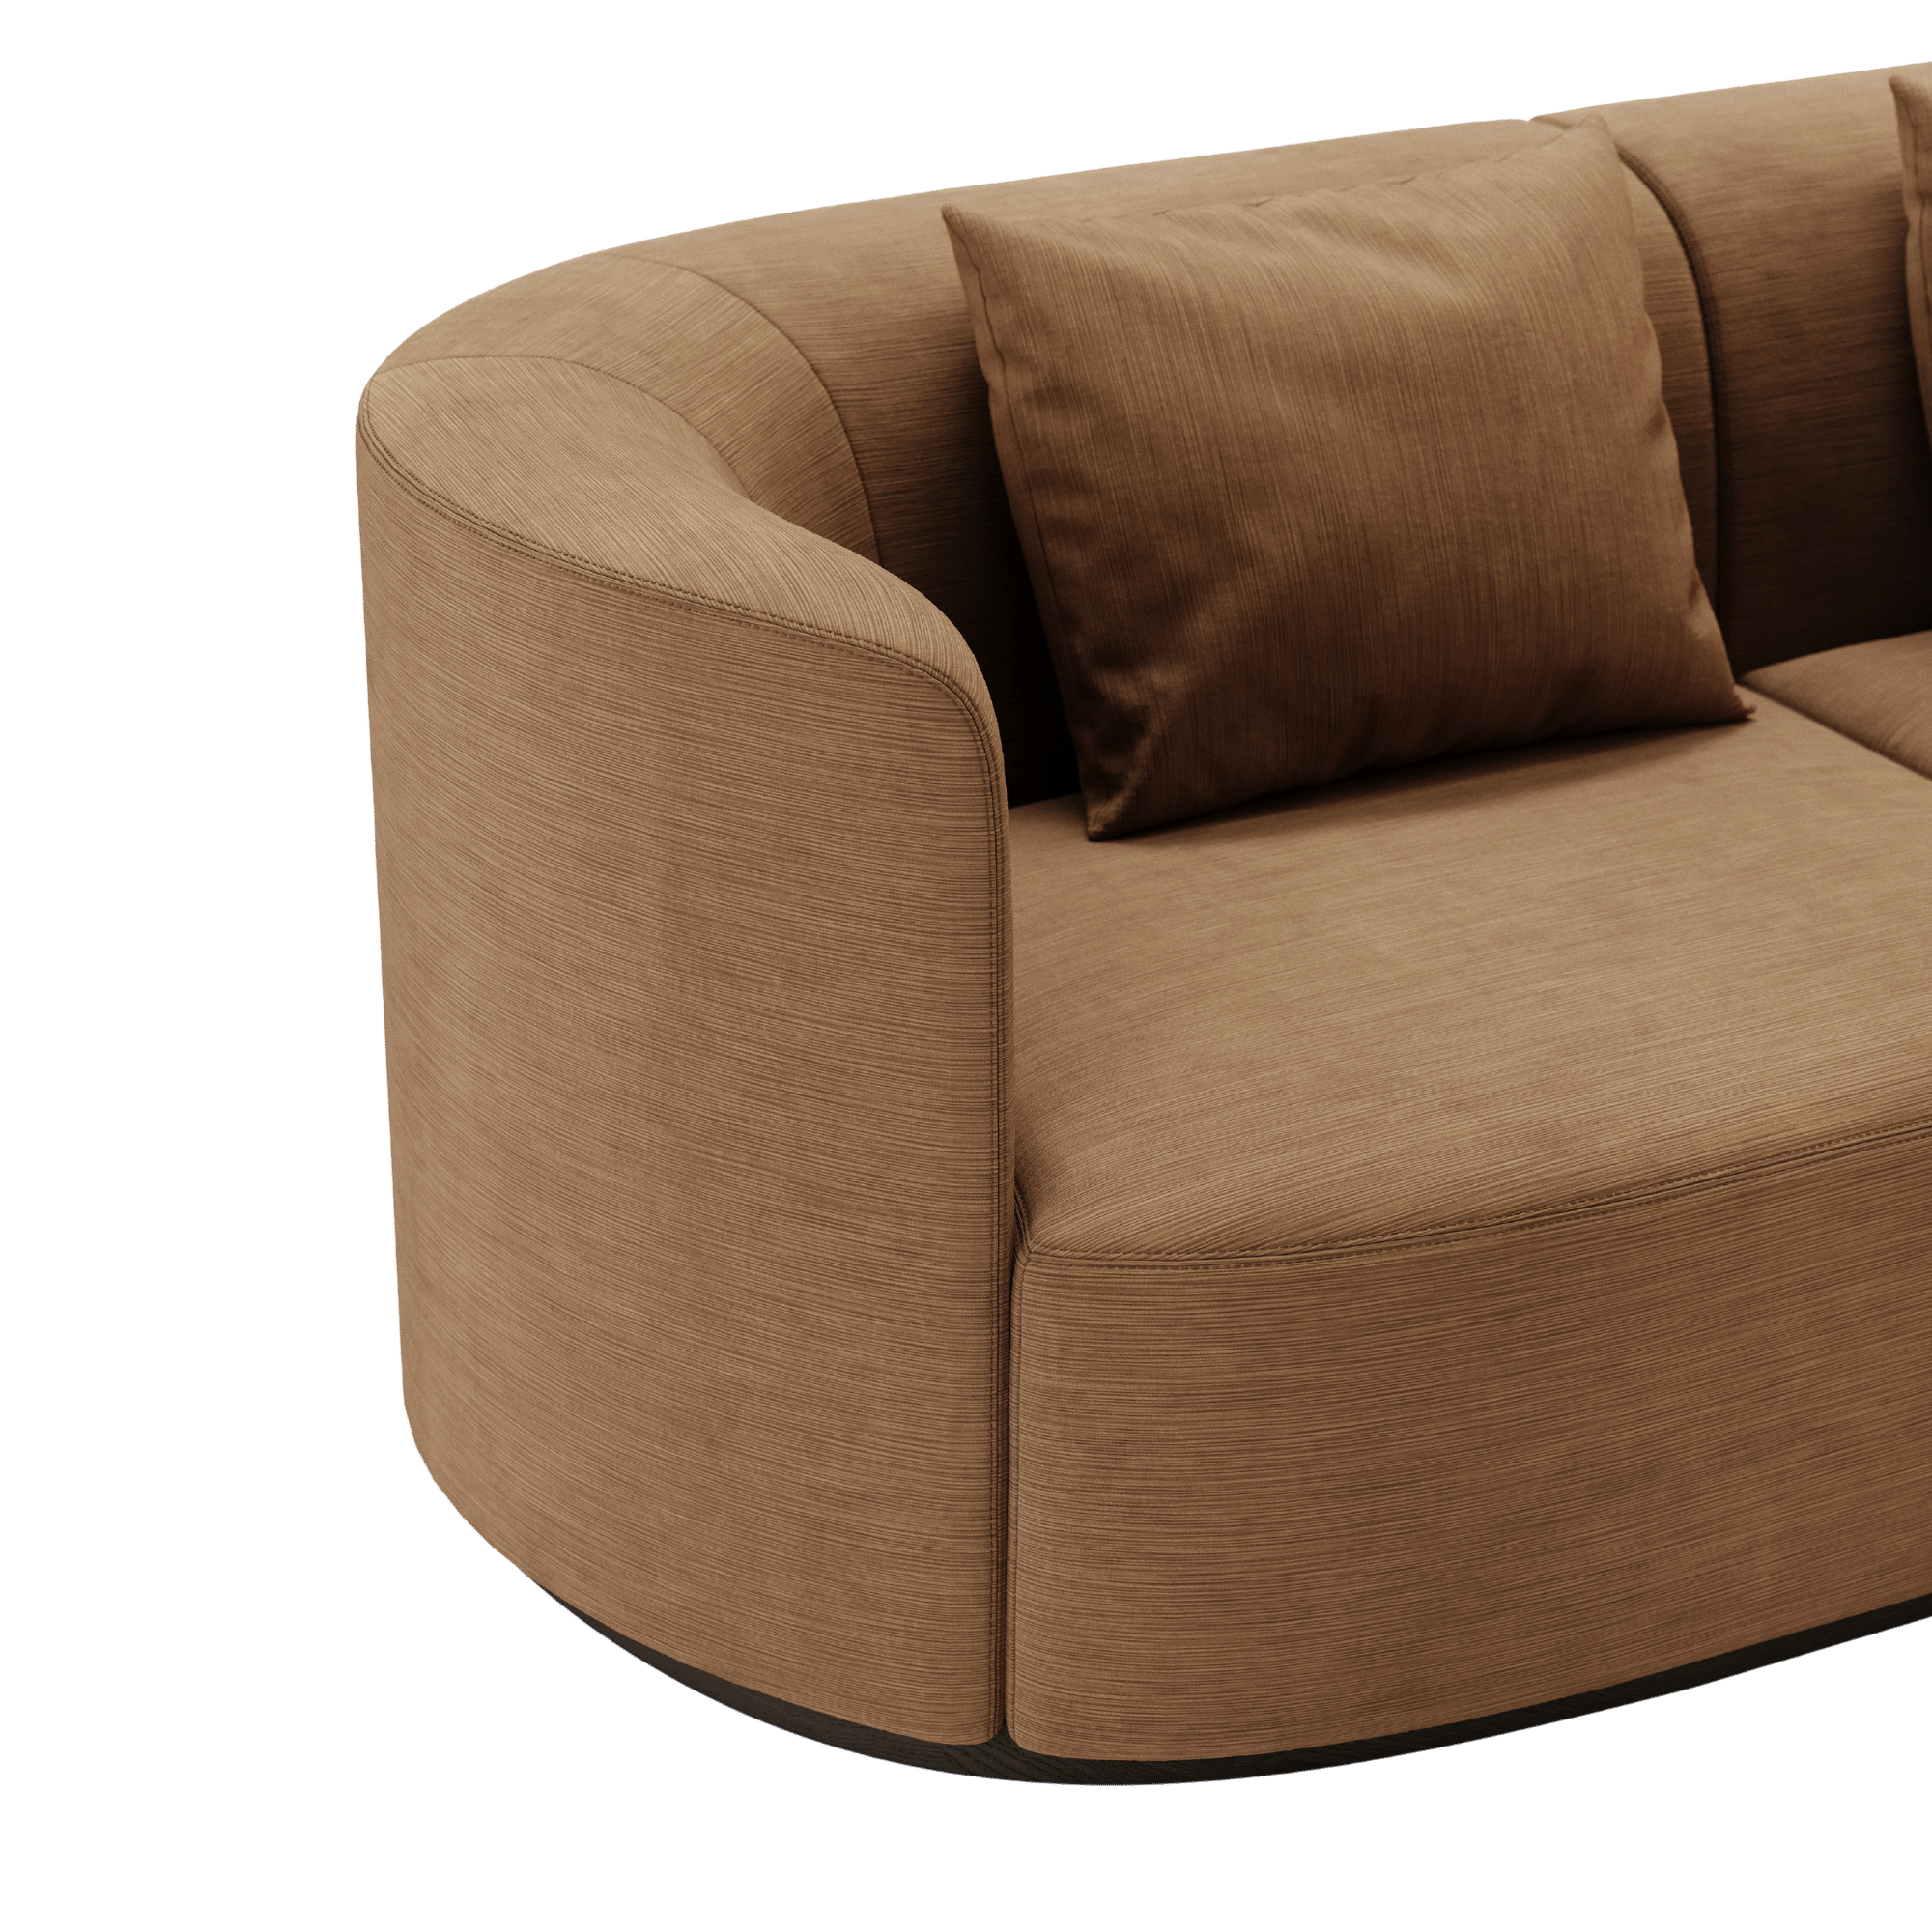 Chloe 2-Seater Sofa - THAT COOL LIVING